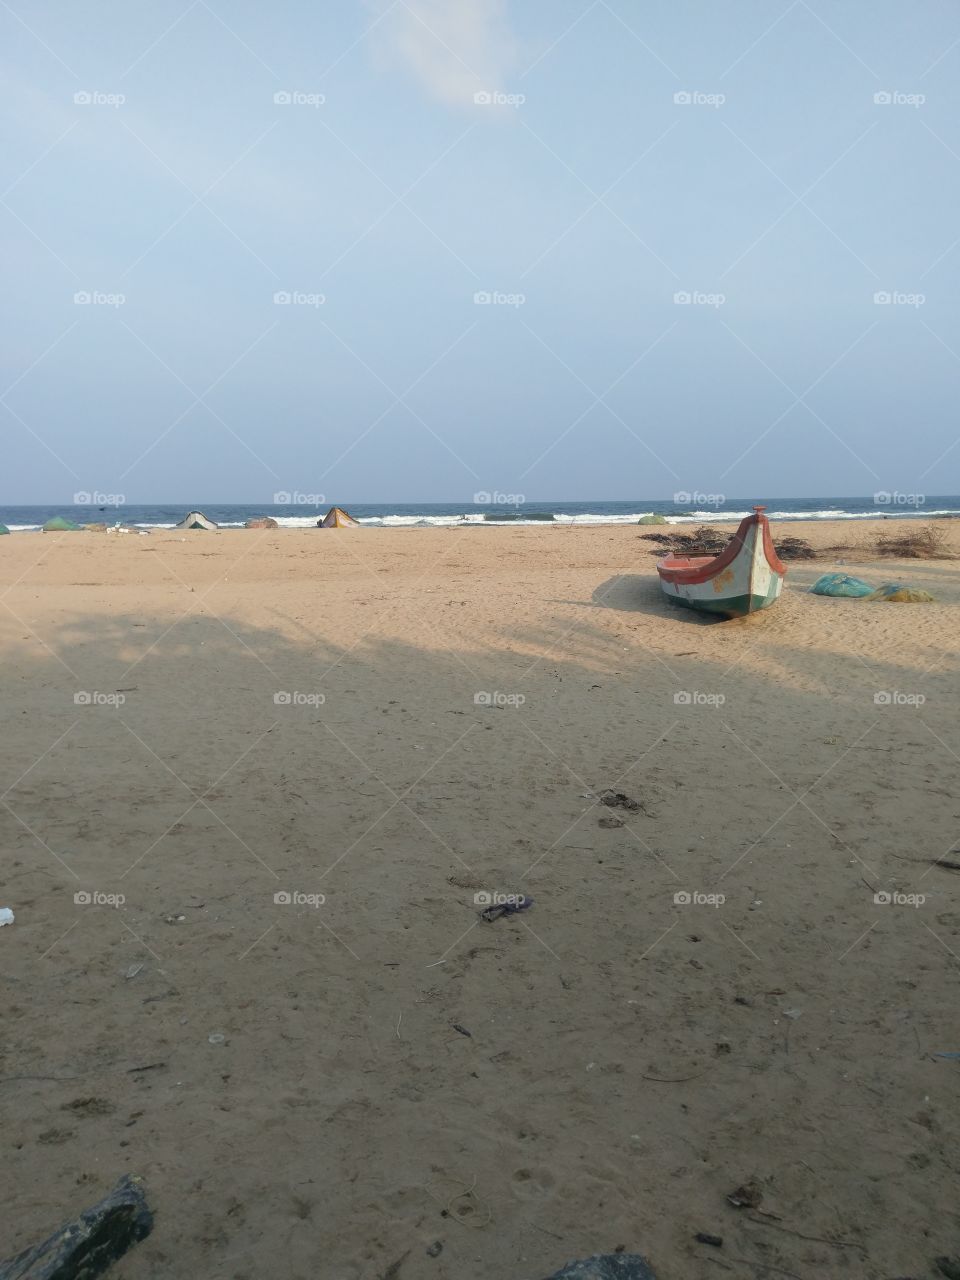 Boats pulled ashore in Mamallapuram, Tamil Nadu